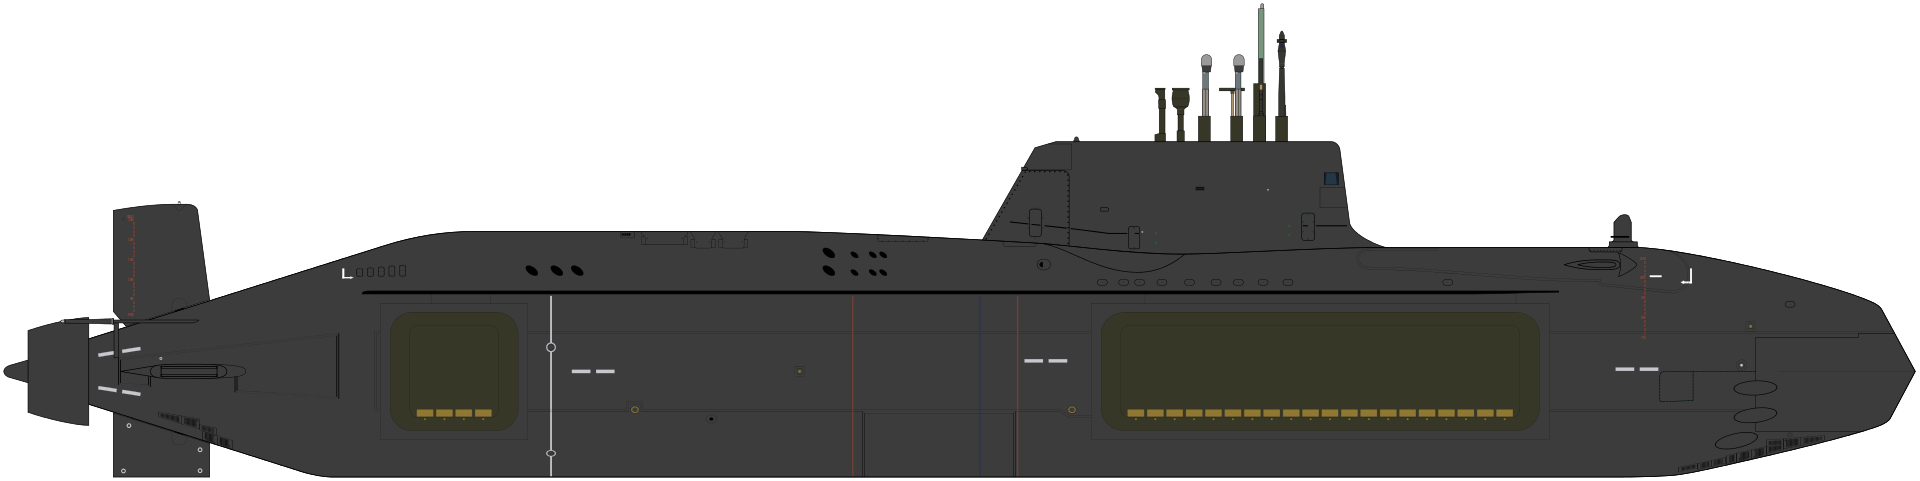 Diagram of an Astute class nuclear submarine in profile